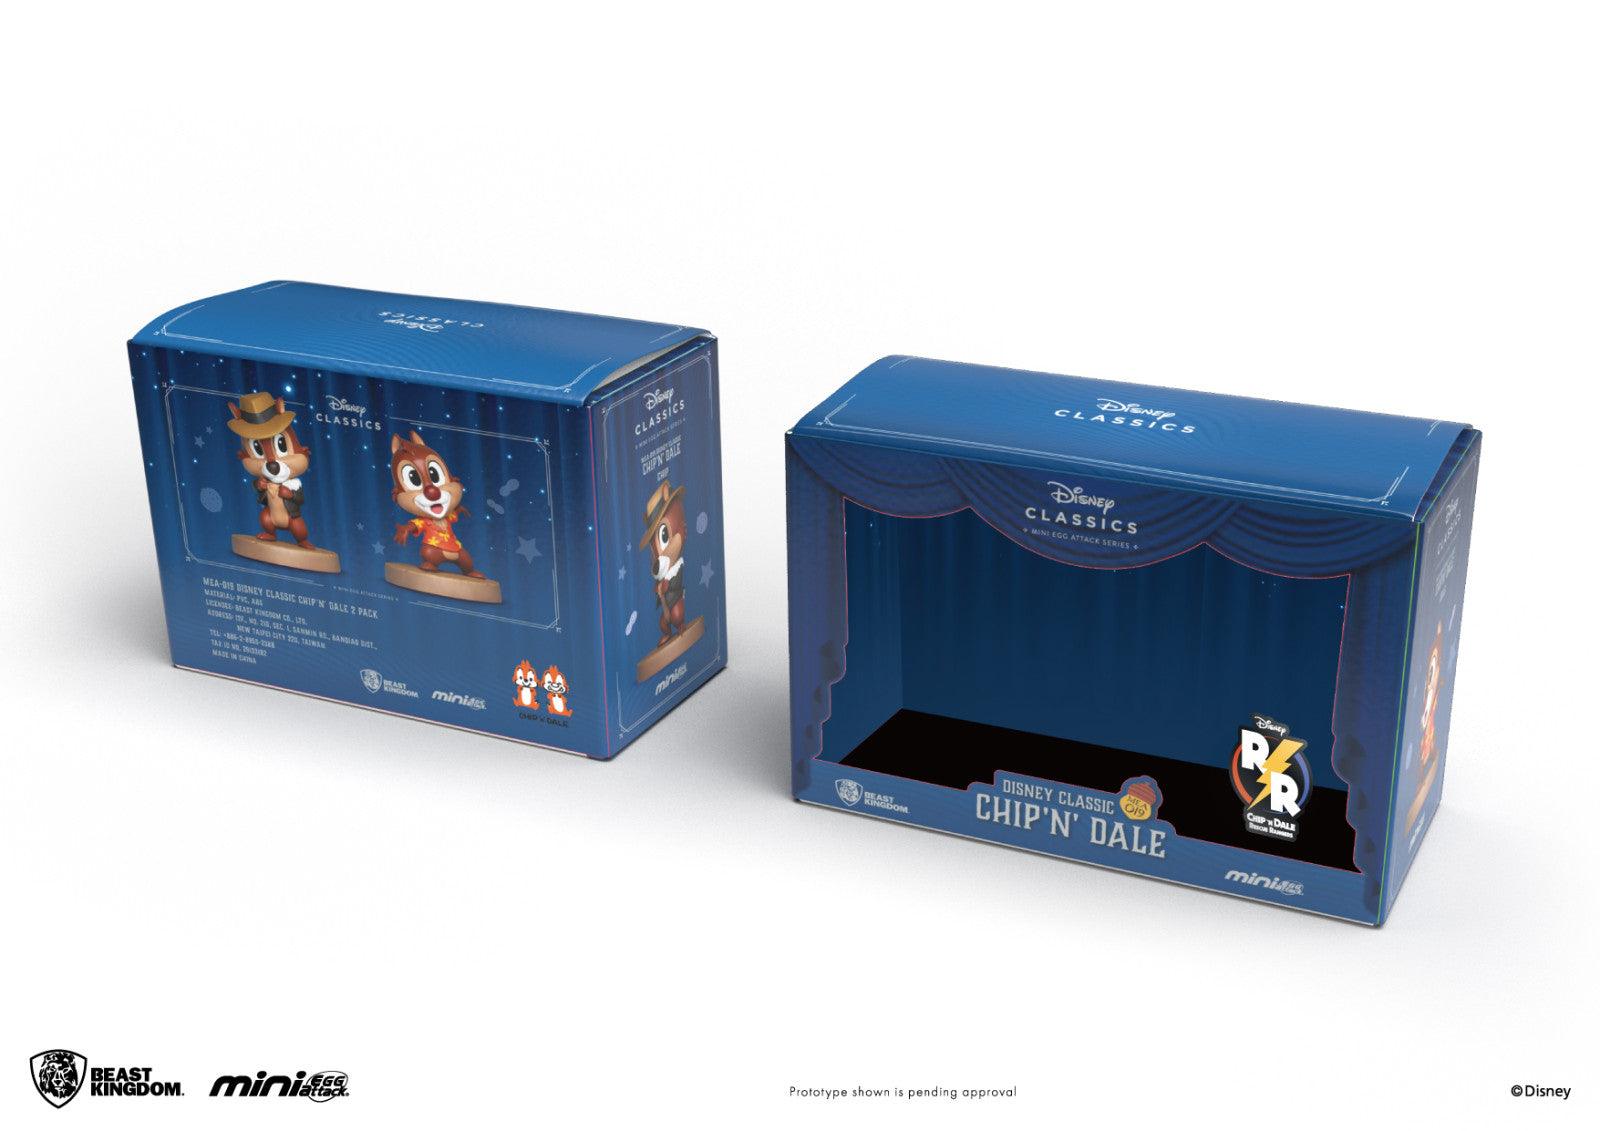 VR-110748 Beast Kingdom Mini Egg Attack Disney Classic Chip 'n' Dale (2 Pack) - Beast Kingdom - Titan Pop Culture